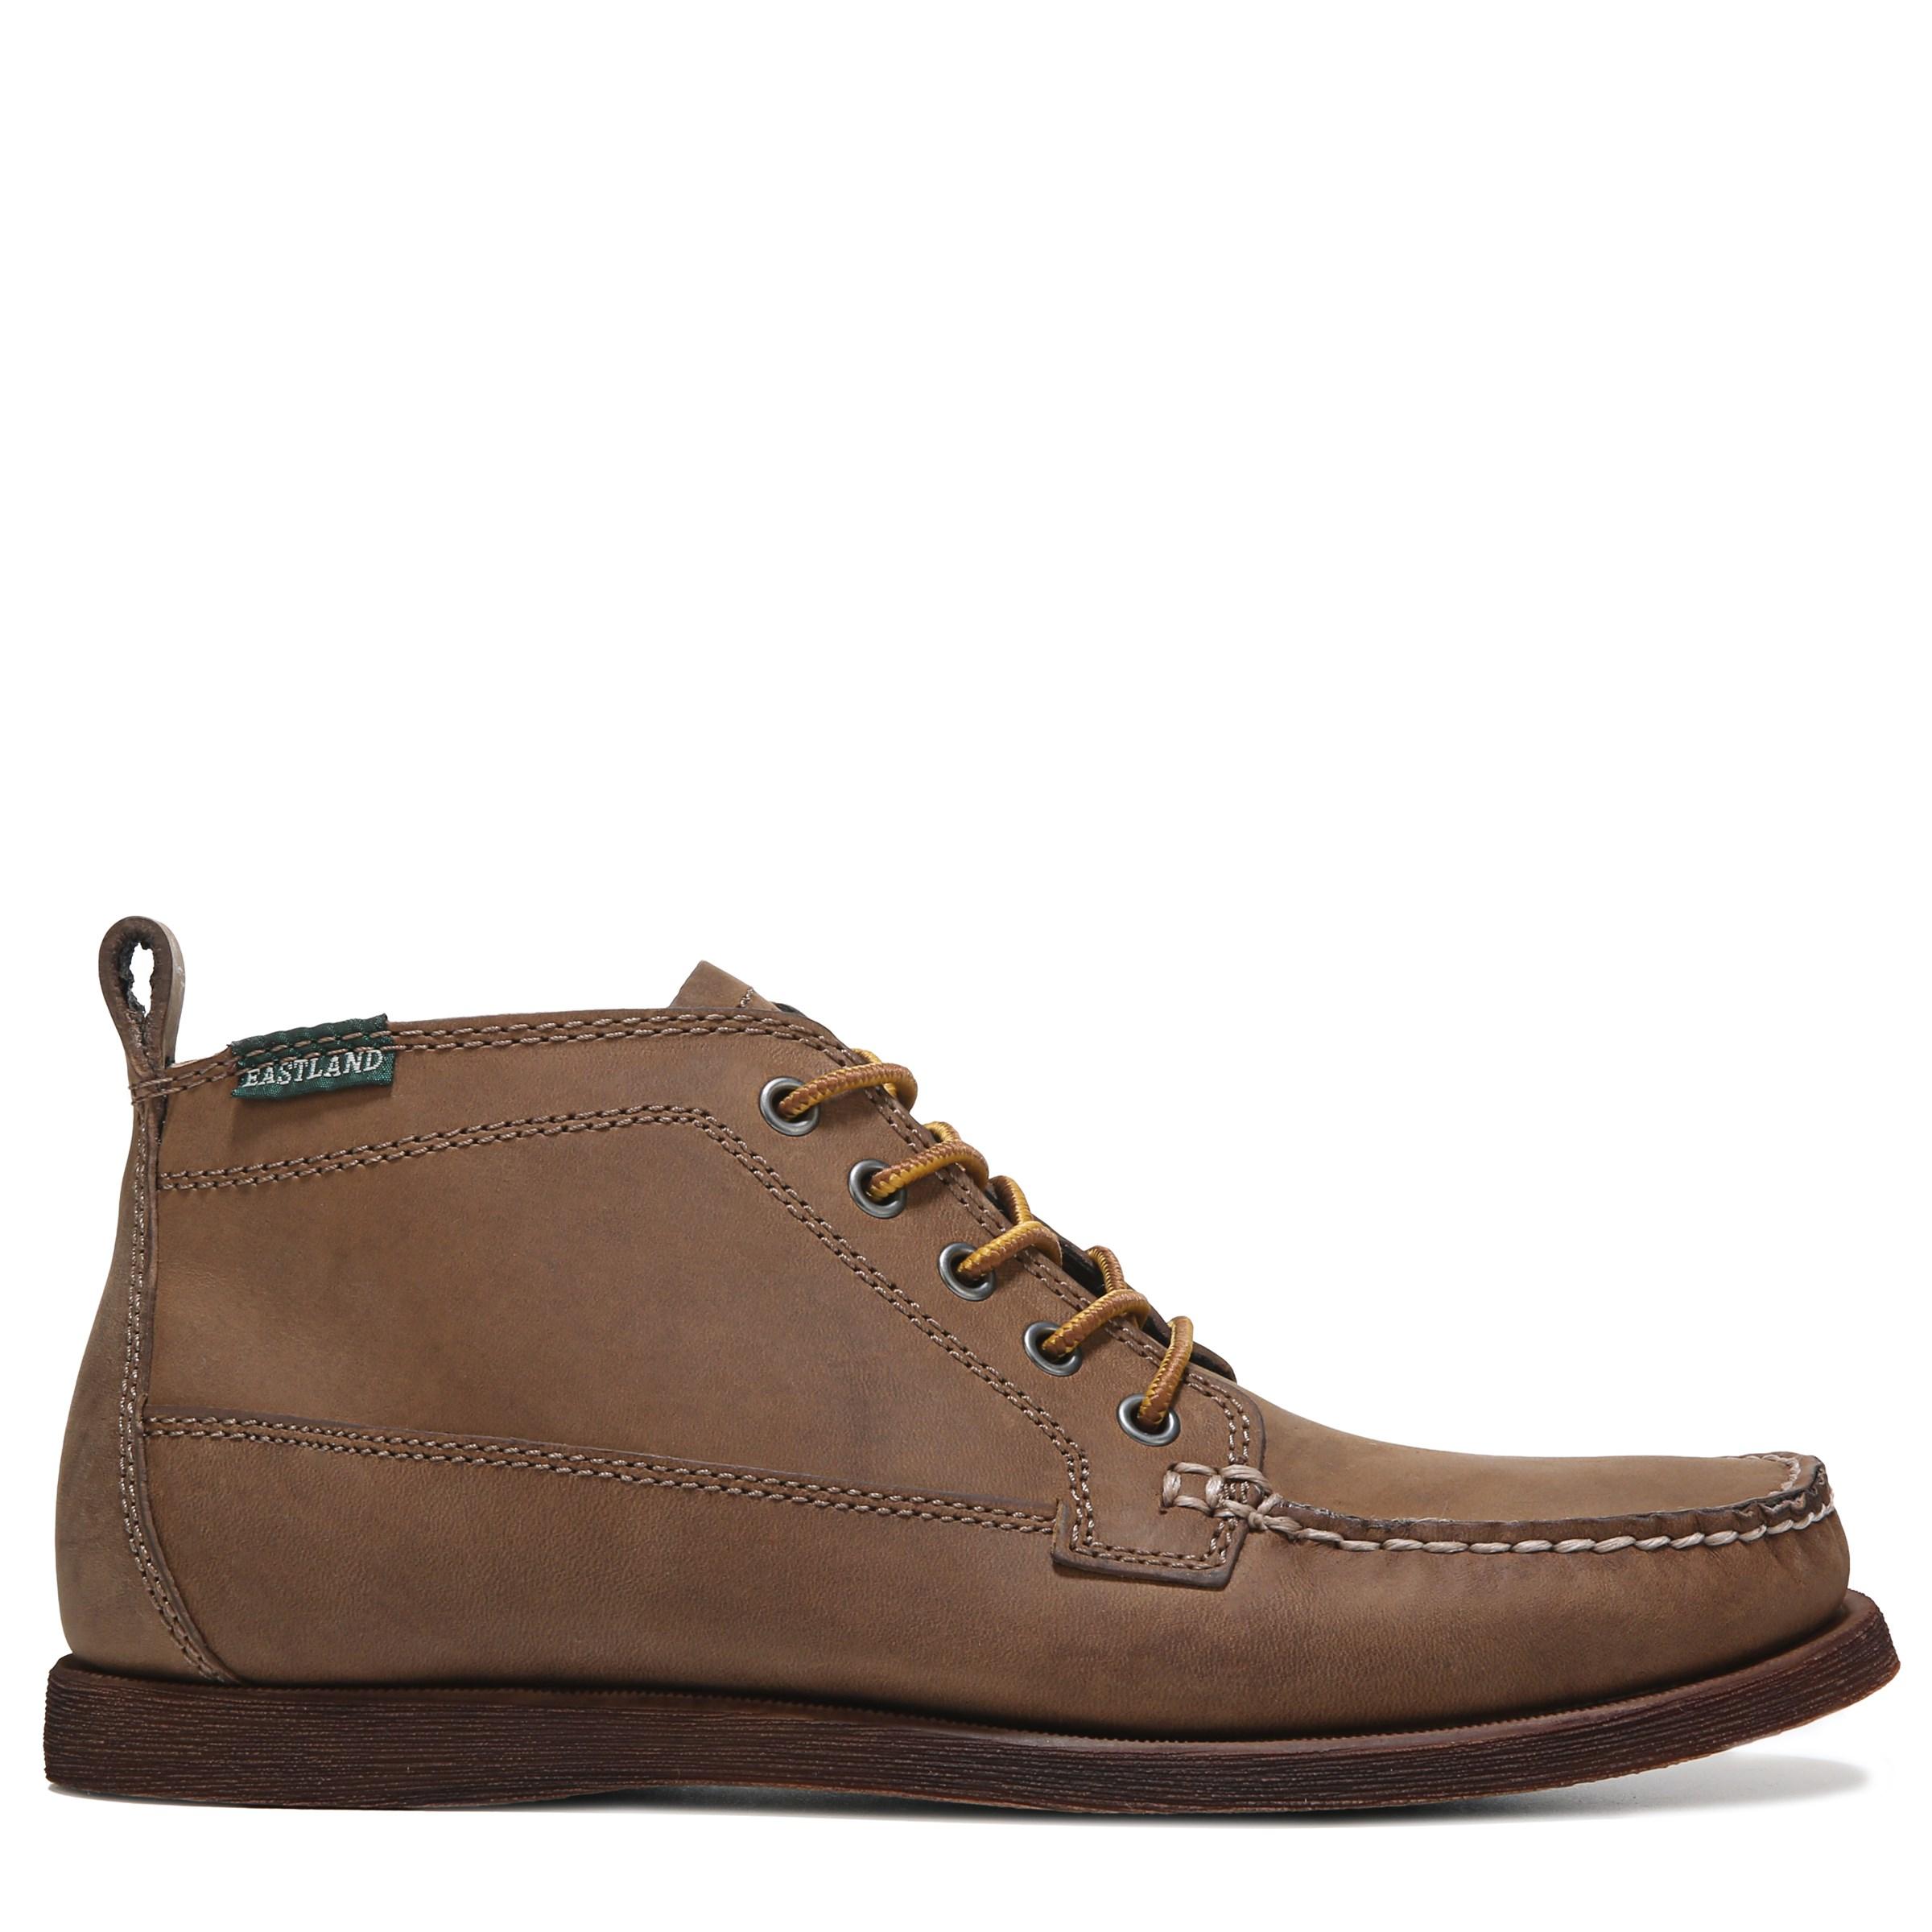 Eastland Seneca Moc Toe Ankle Boots in Tan (Brown) for Men - Lyst